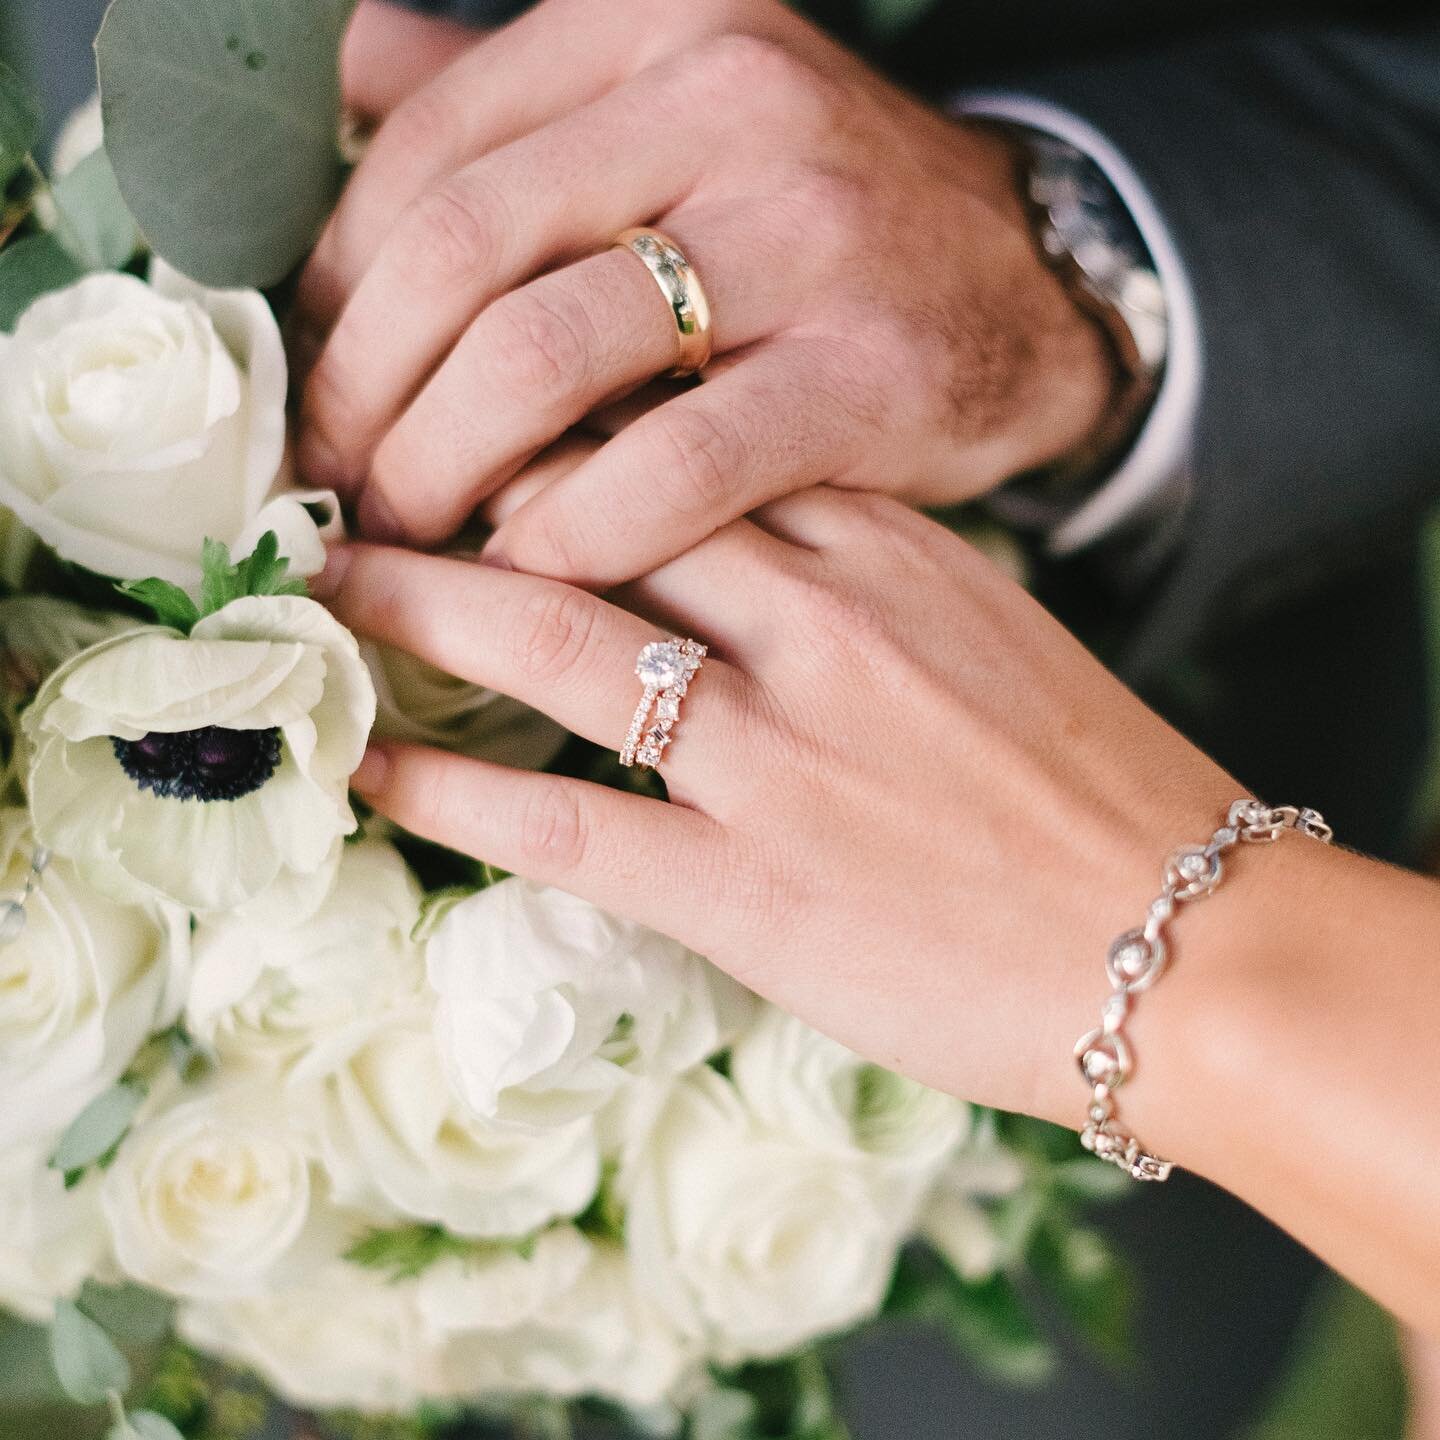 symbols of forever 💍 happy thursday to you and yours! 

#weddingphotography #louisianawedding